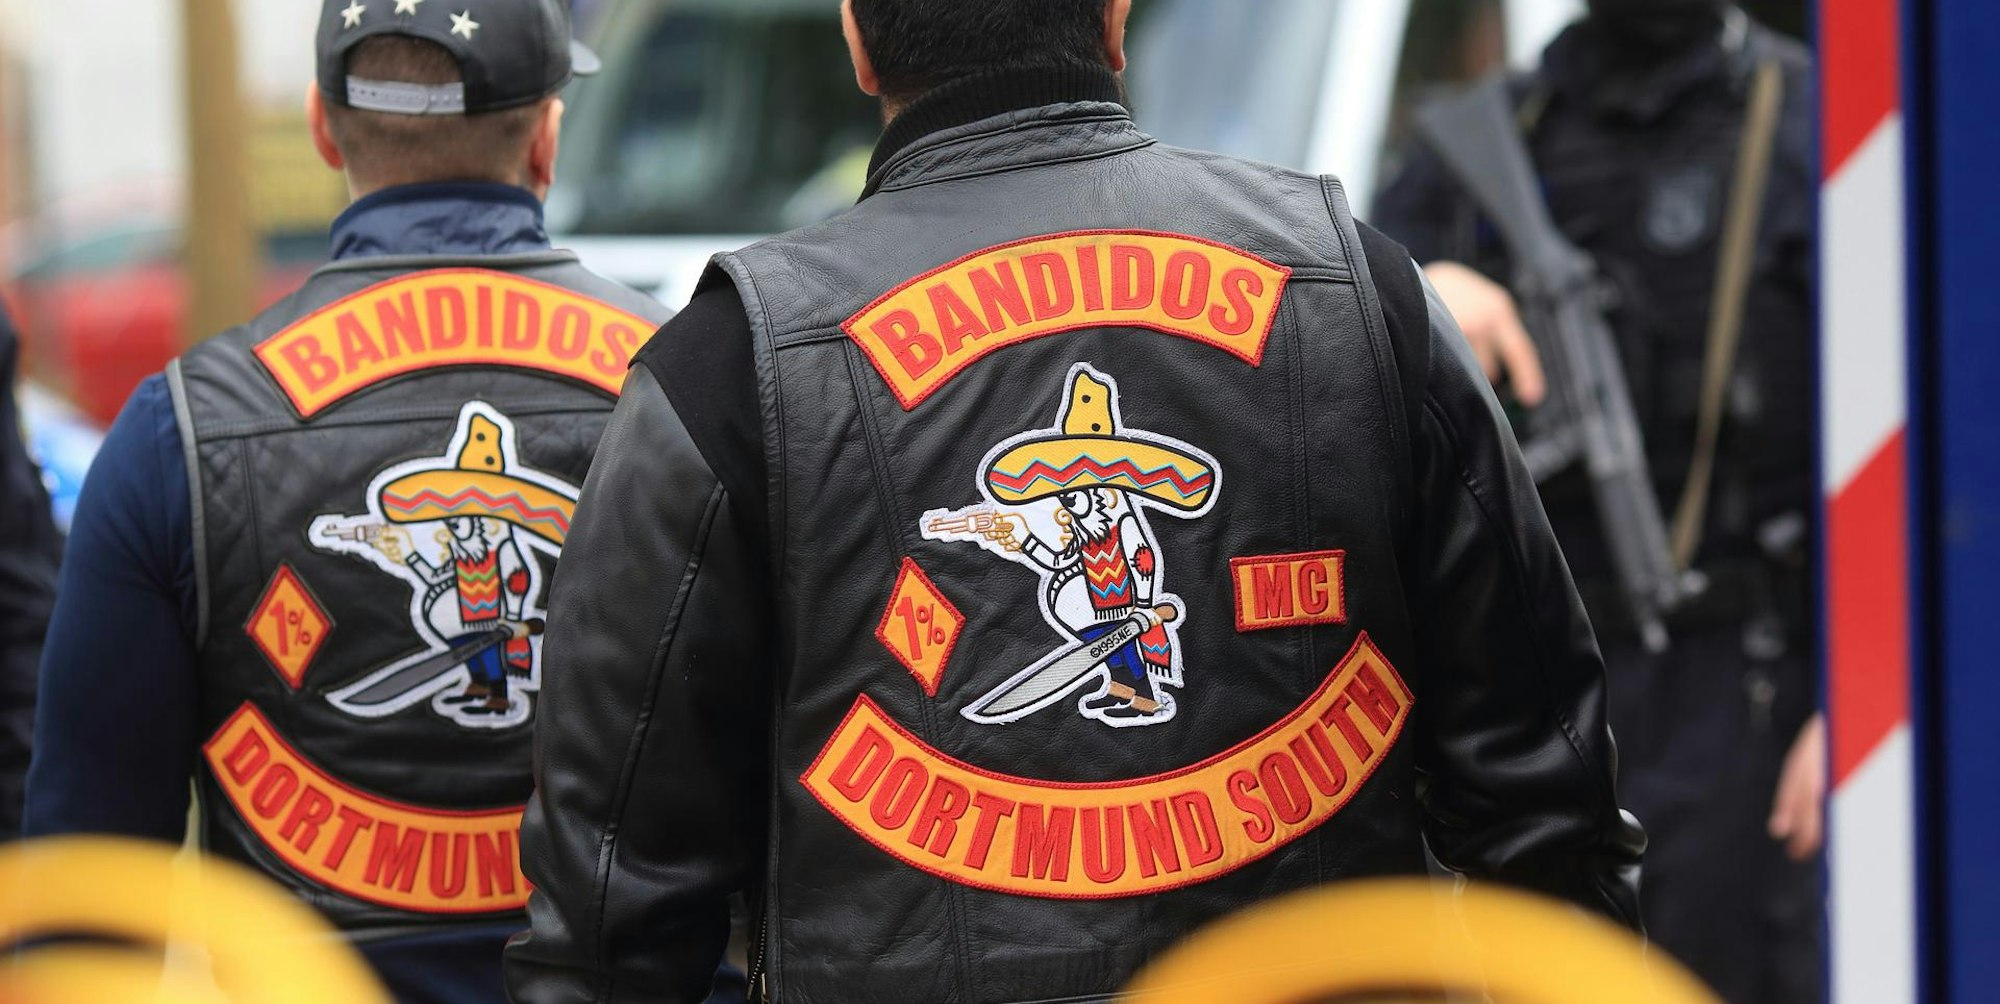 Bandidos_Kutten_Symbolbild